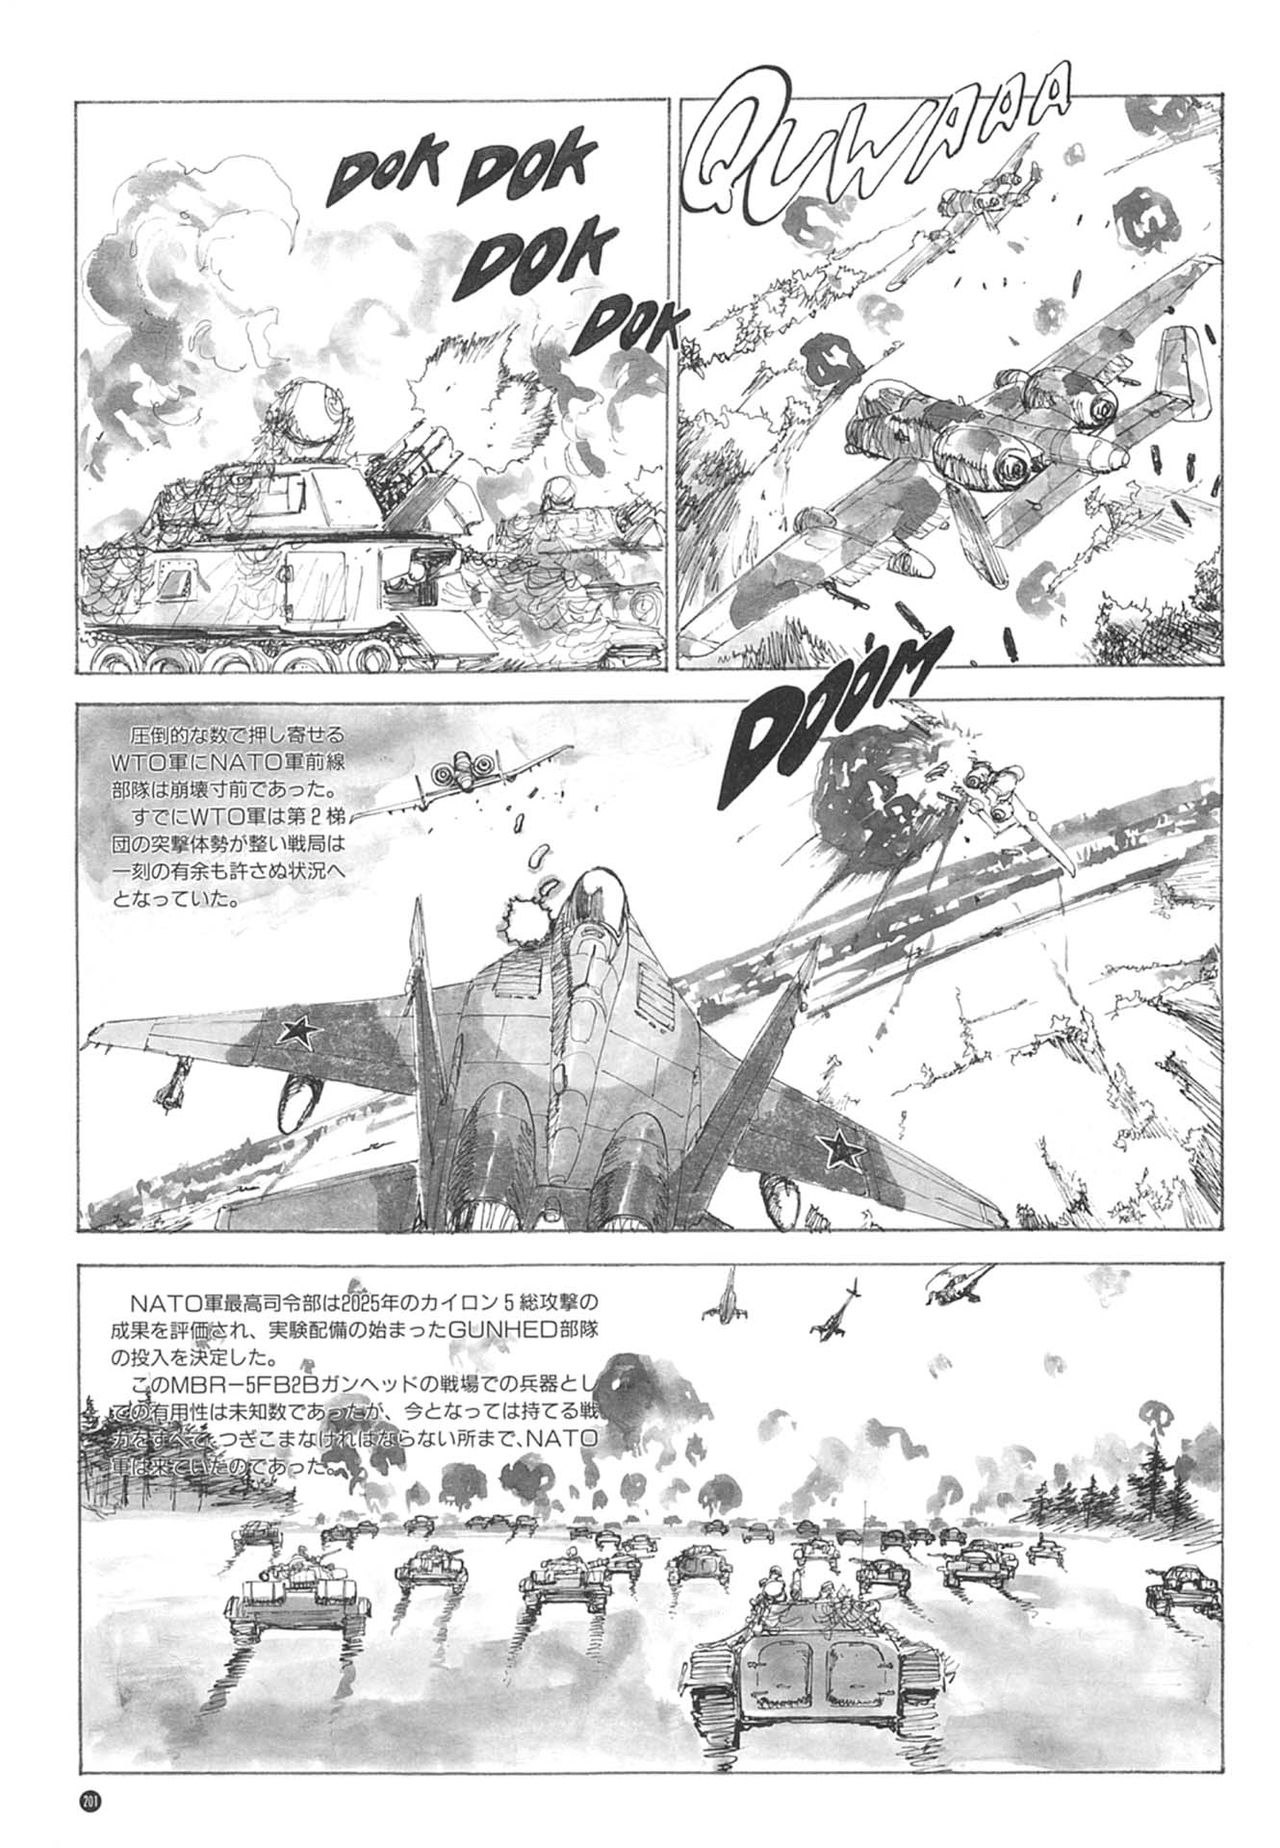 [Kazuhisa Kondo] Kazuhisa Kondo 2D & 3D Works - Go Ahead - From Mobile Suit Gundam to Original Mechanism 200